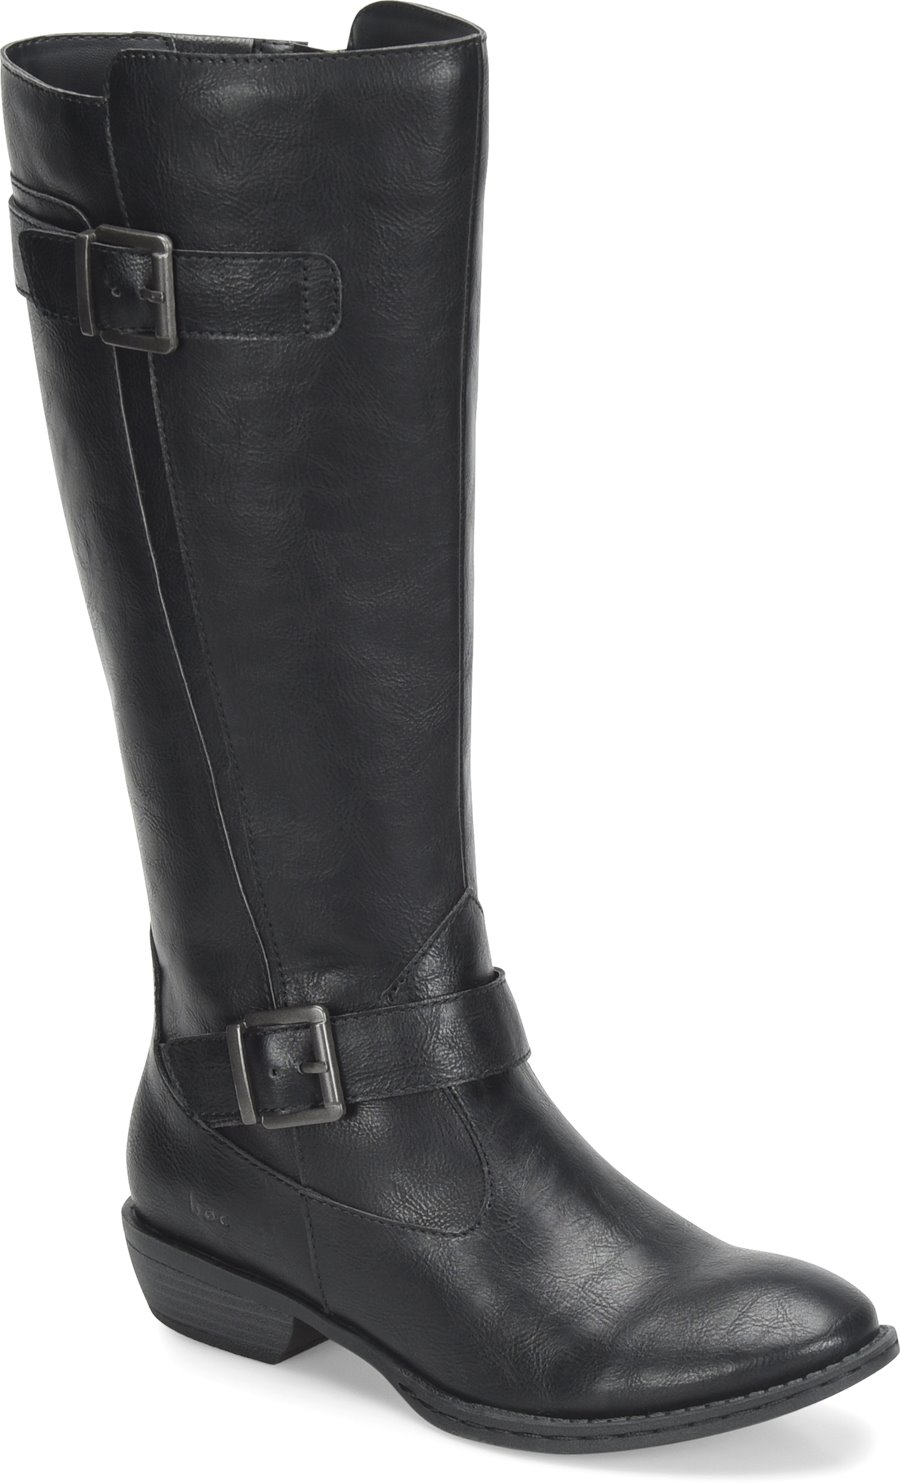 BOC Kasper in Black - BOC Womens Boots on Shoeline.com